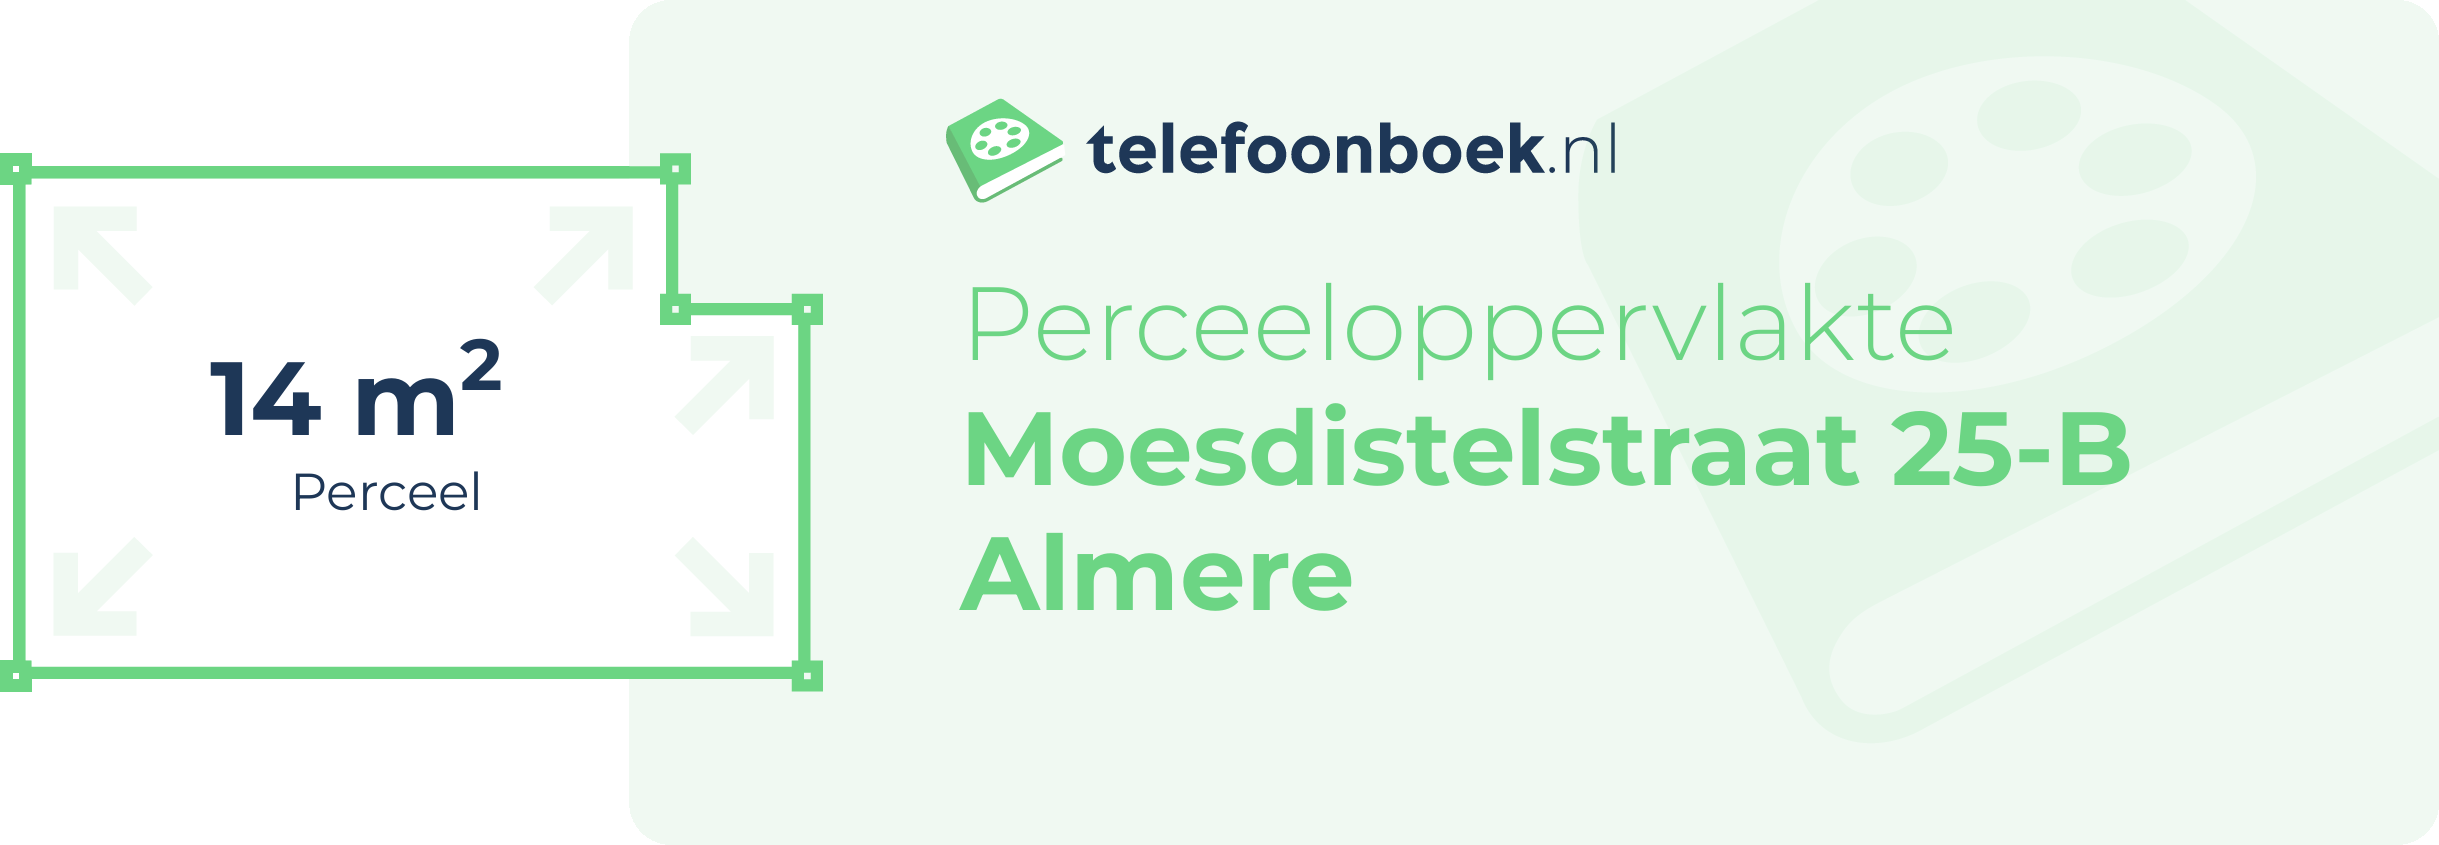 Perceeloppervlakte Moesdistelstraat 25-B Almere